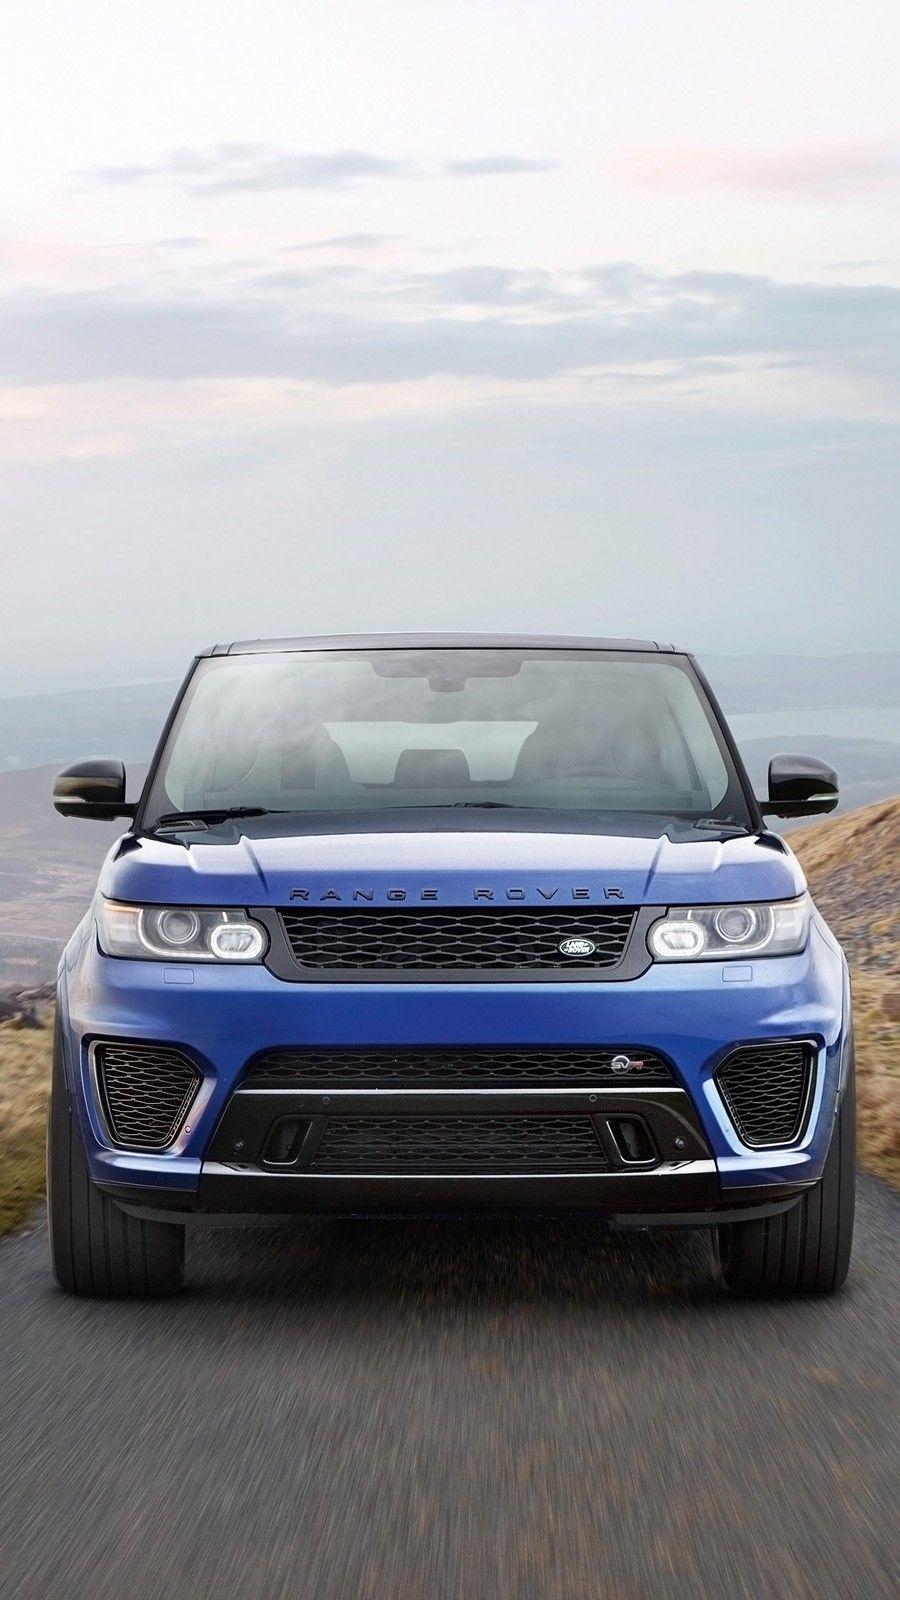 Land Rover Range Rover Sport SVR iPhone Wallpaper. Range rover sport, Range rover, Mercedes benz sls amg